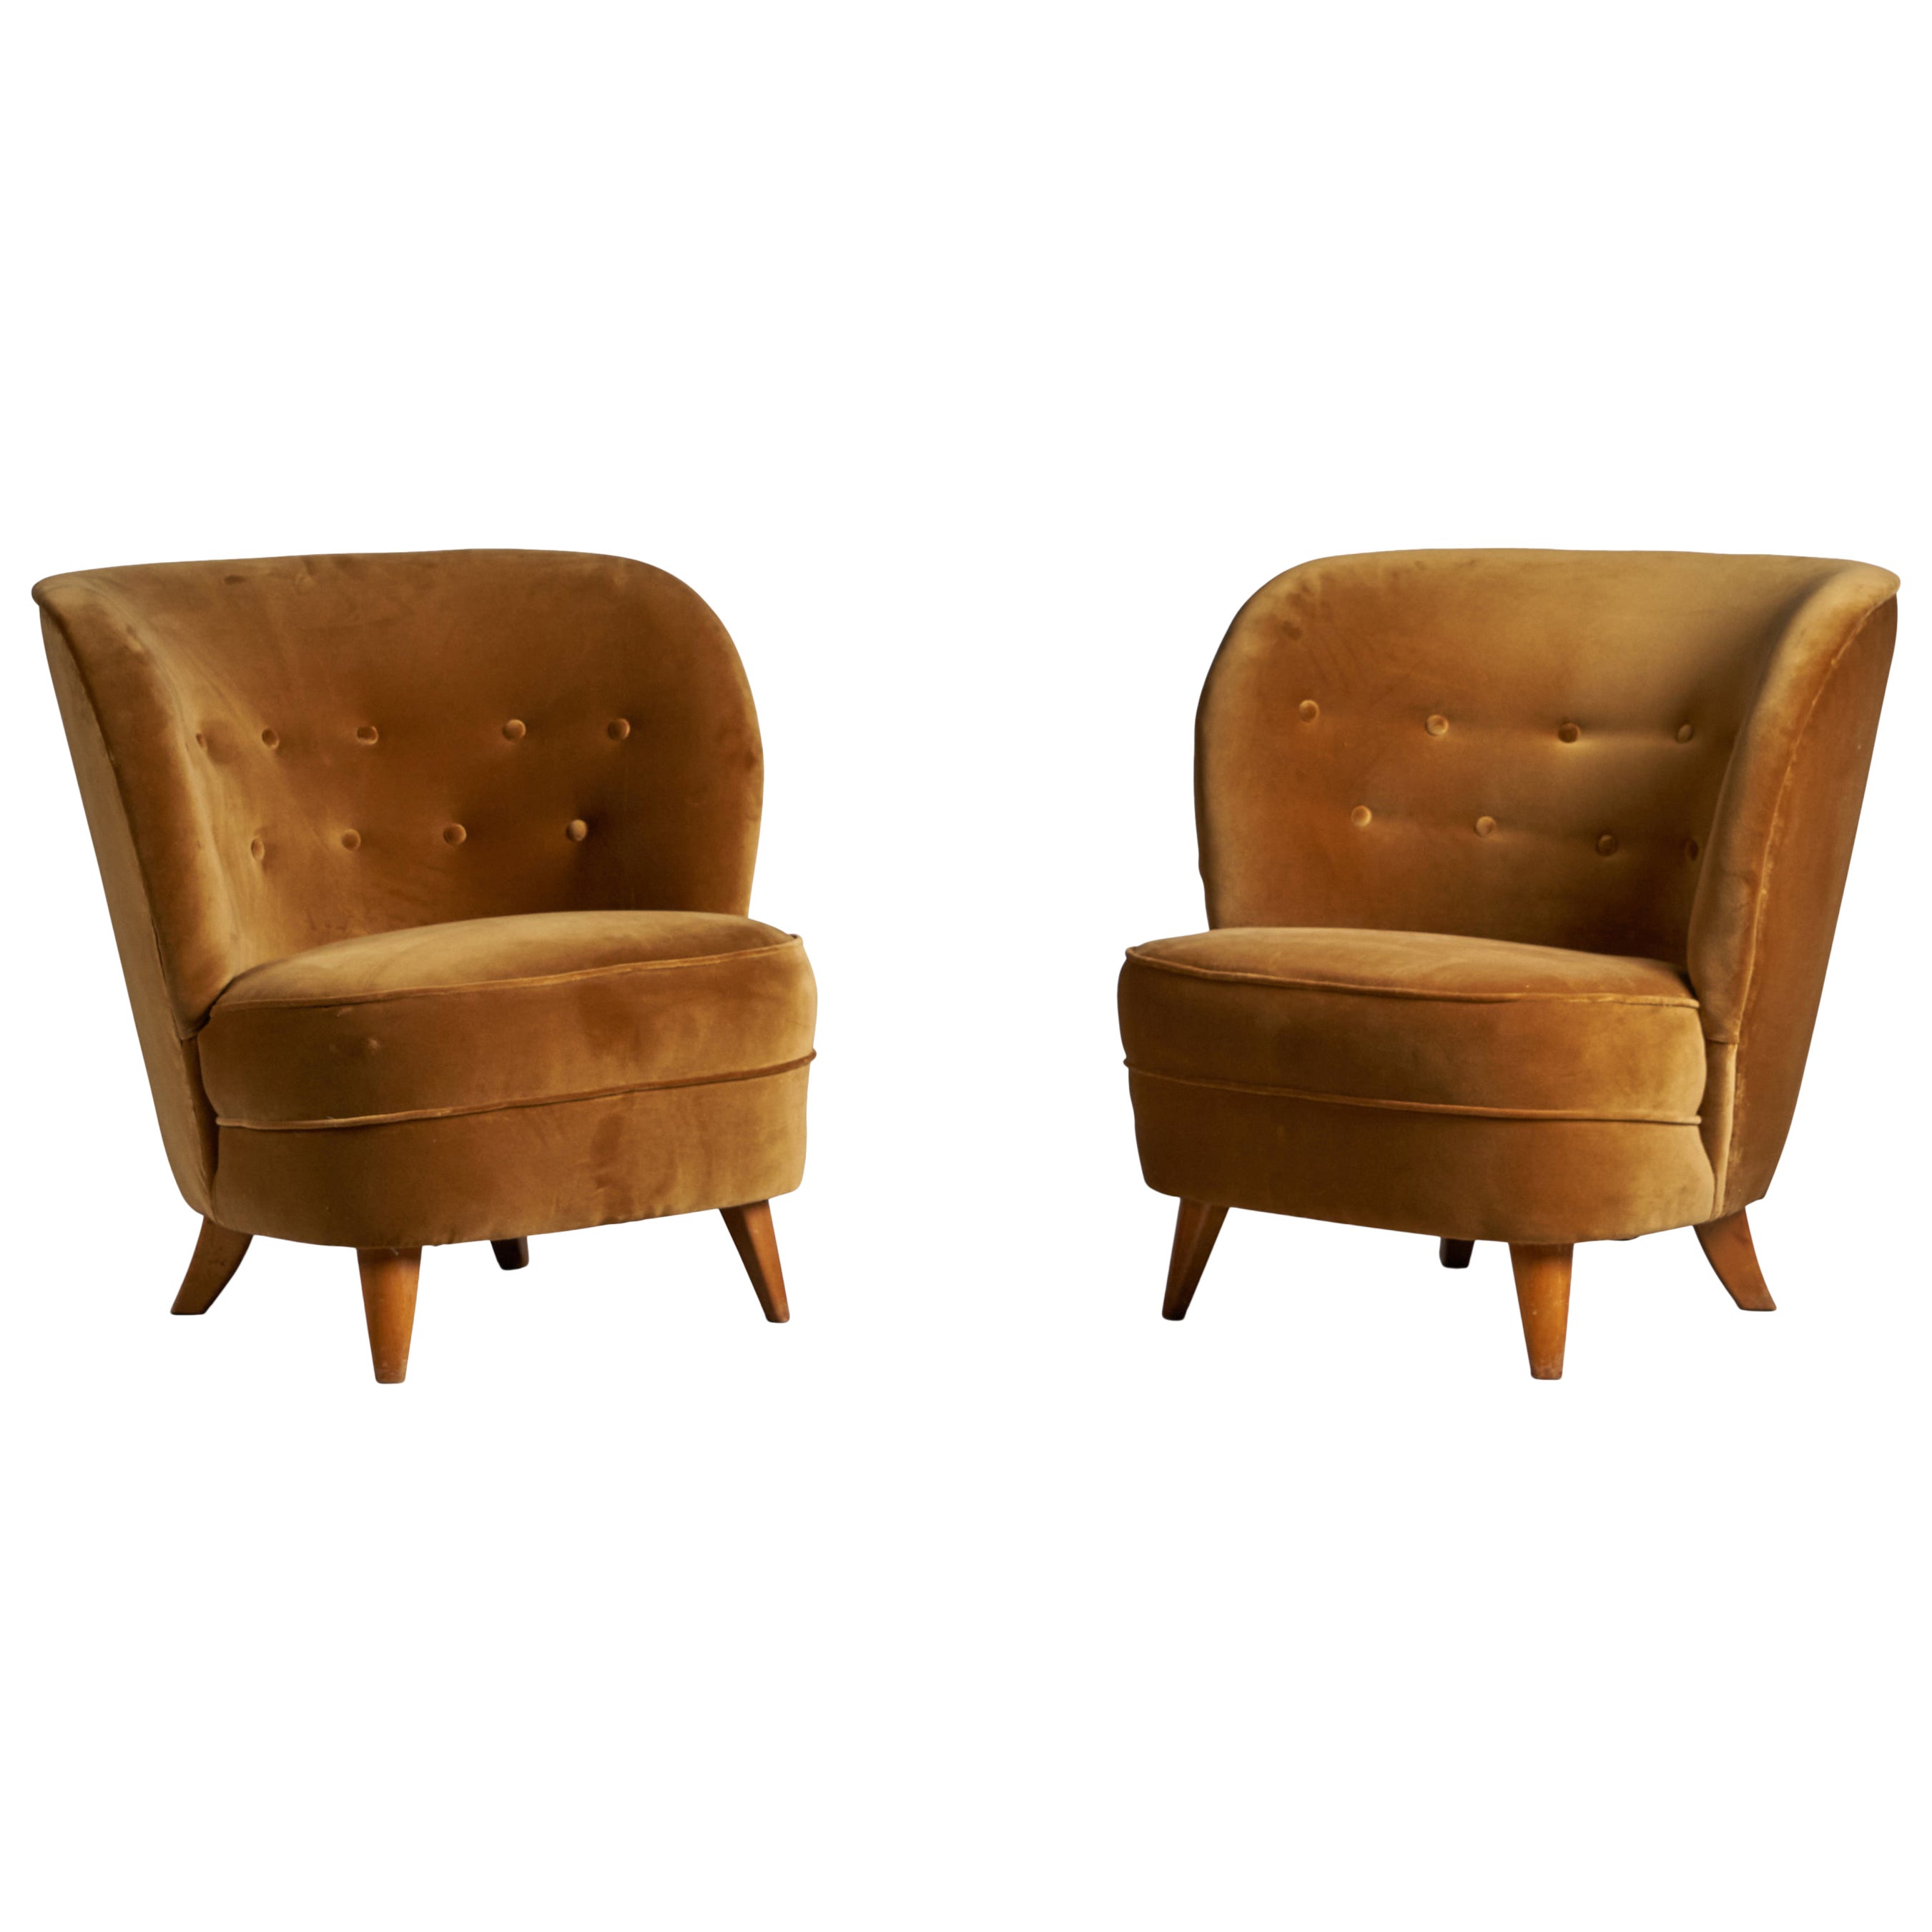 Tor Wolfenstein, Lounge Chairs, Wood, Velvet, Sweden, 1940s For Sale